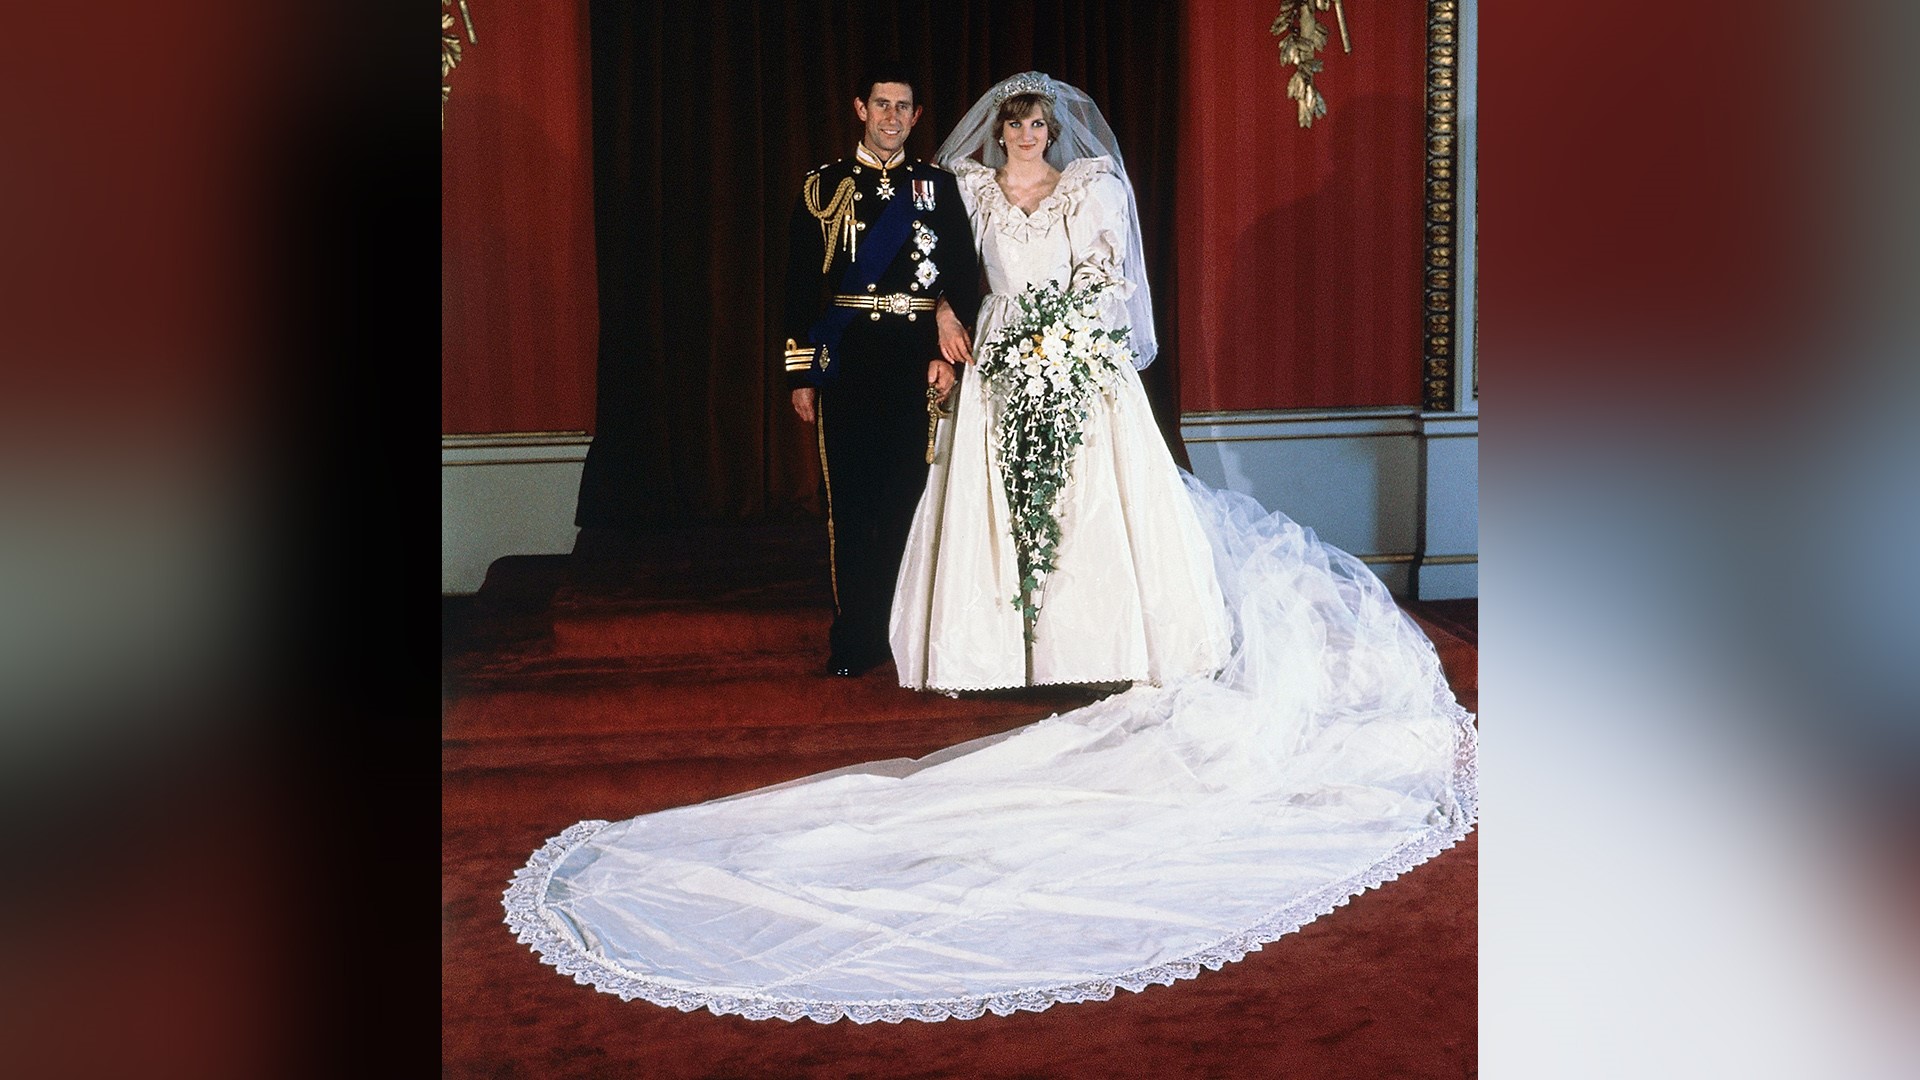 Princess Dianas Wedding Dress On Display In London